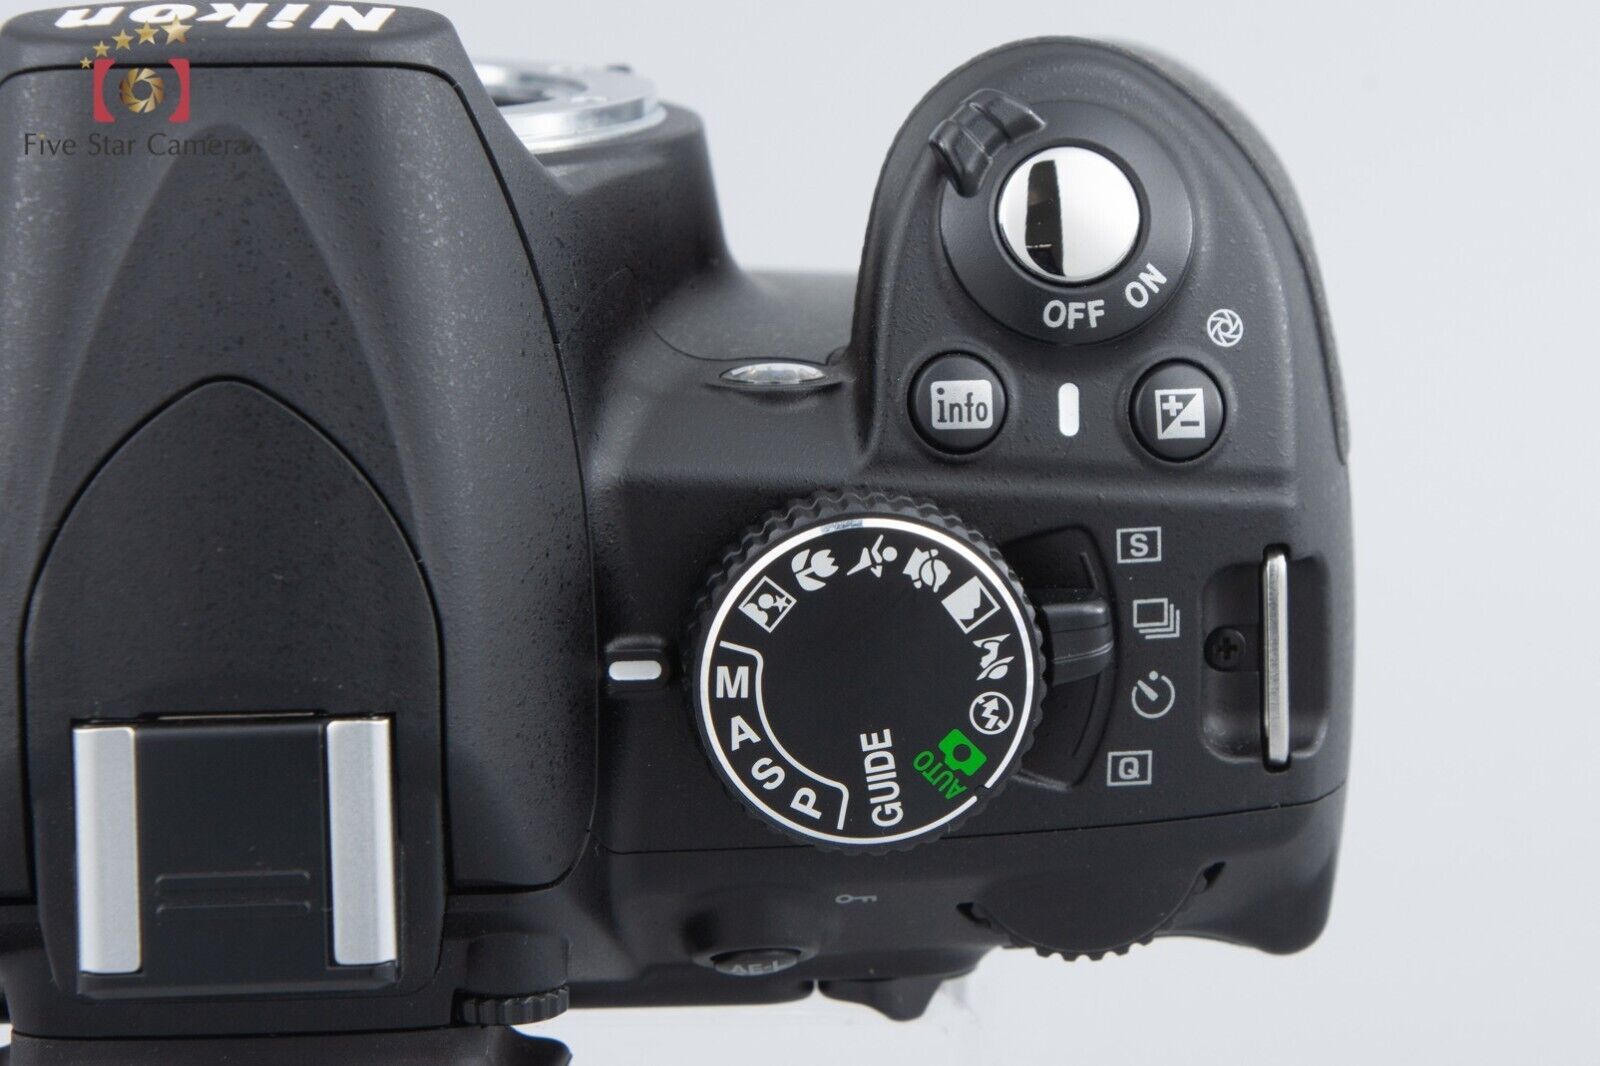 "Shutter count 290" Nikon D3100 14.2 MP Digital SLR Camera